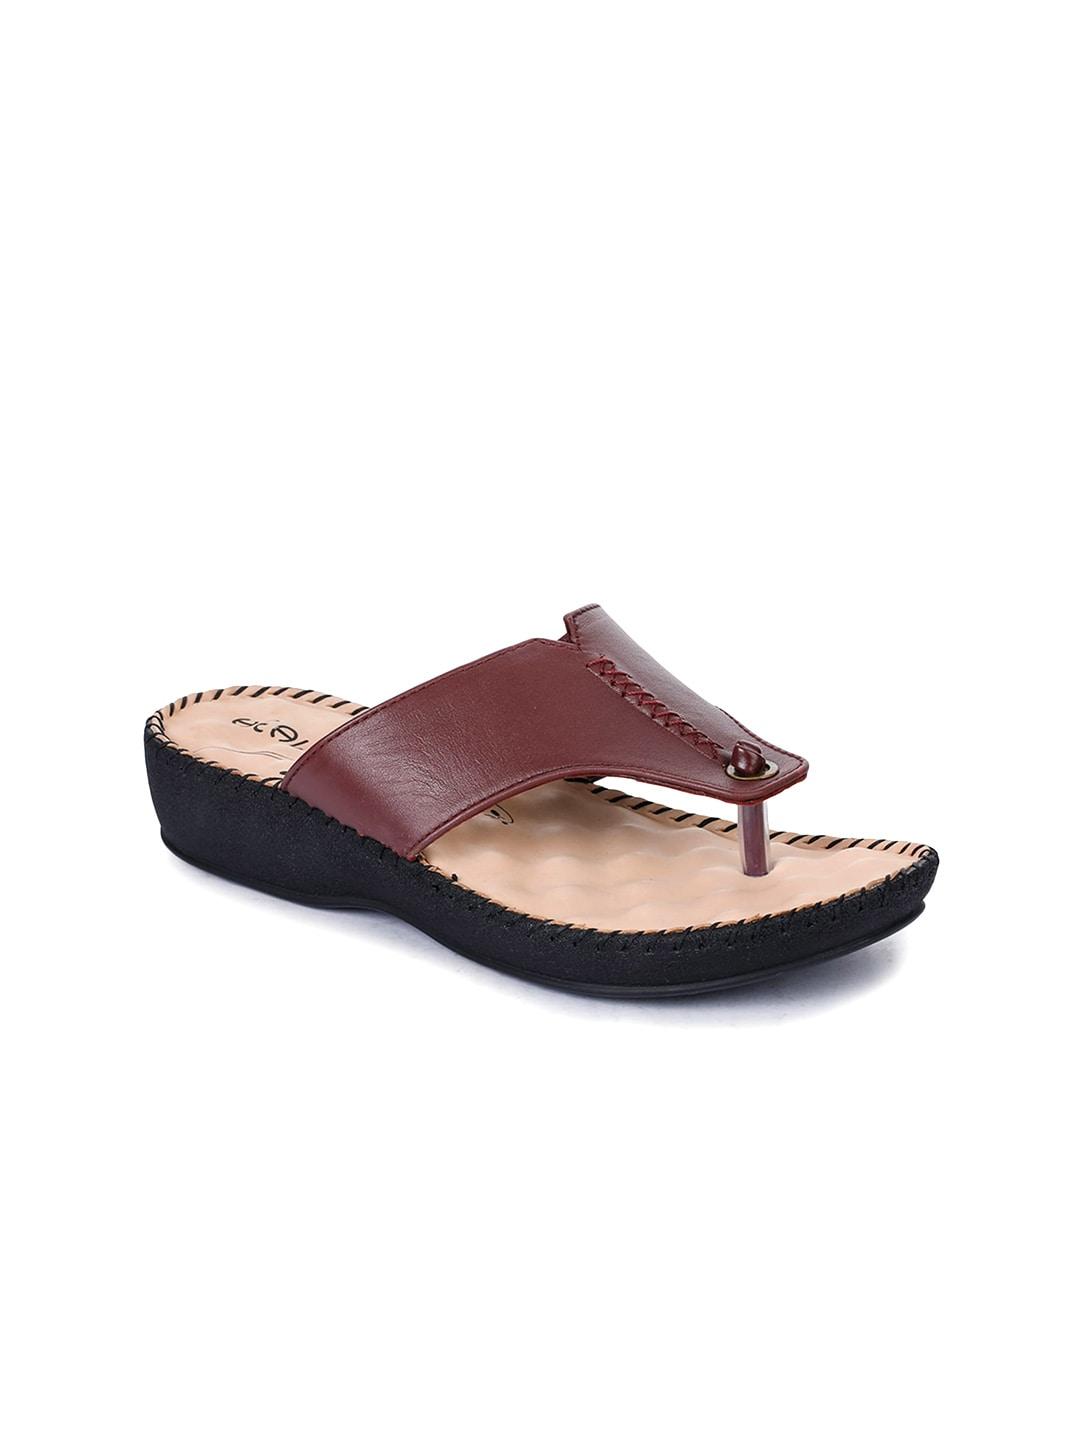 liberty open toe leather comfort heels